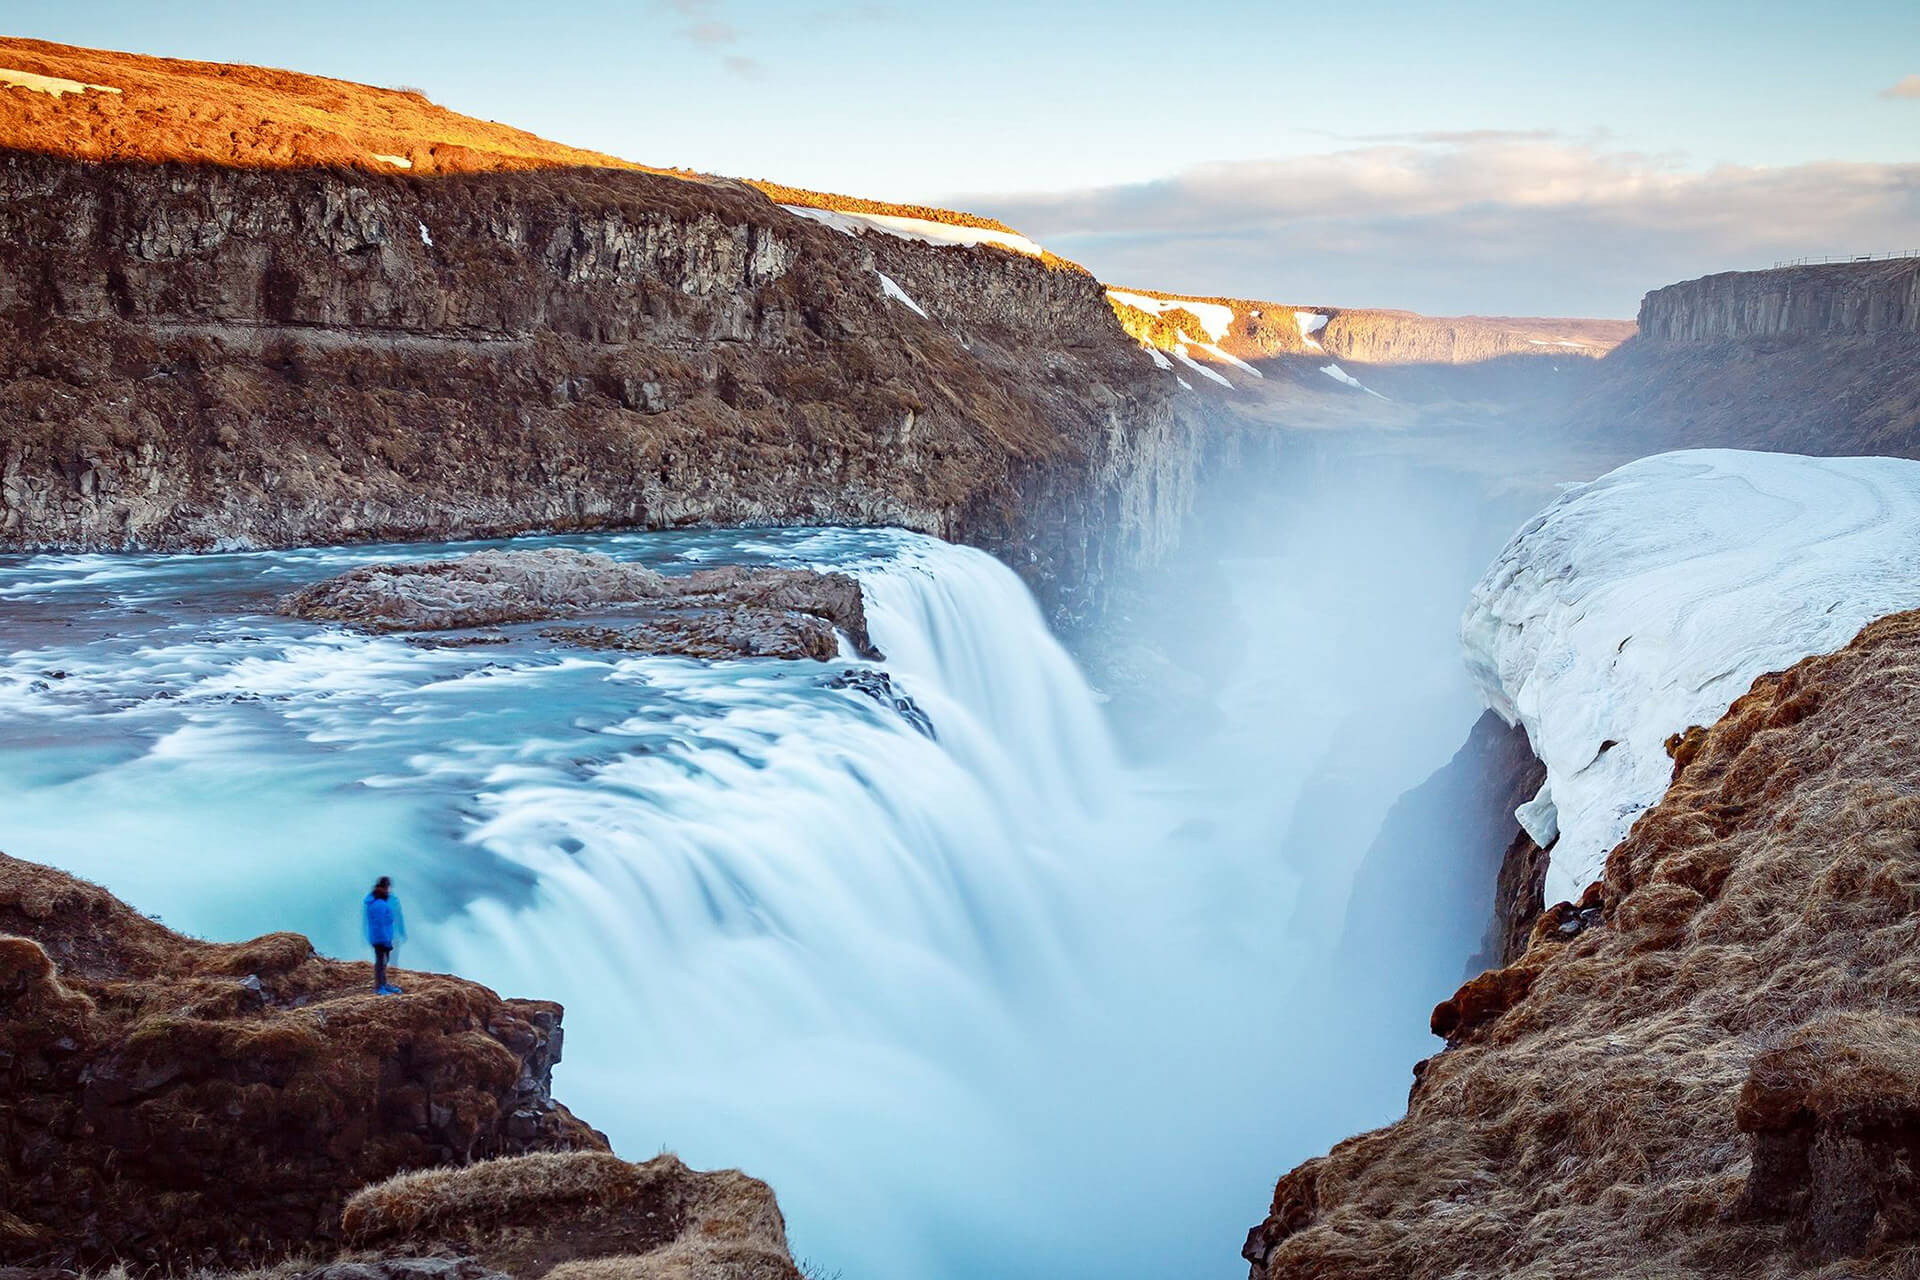 Iceland’s Otherworldly Wilds